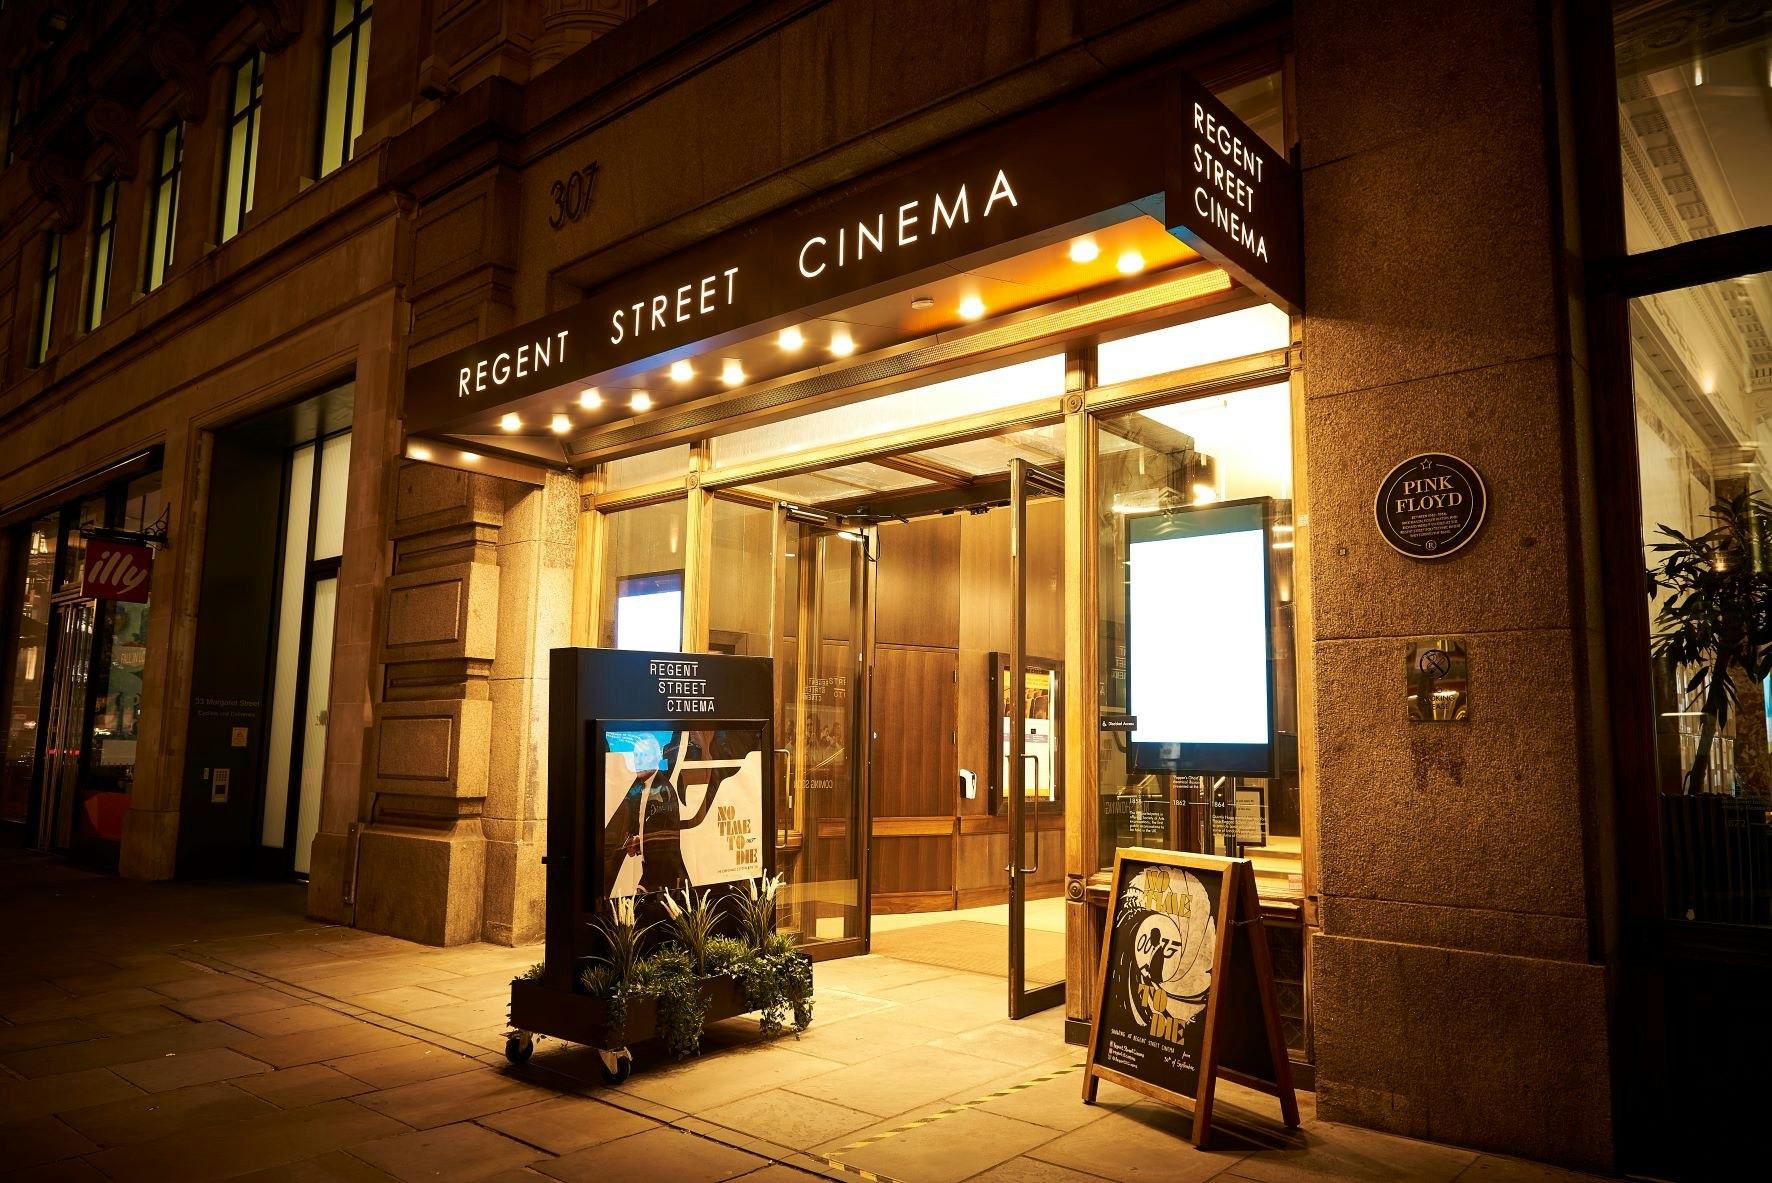 Regent Street Cinema - Cinema image 2